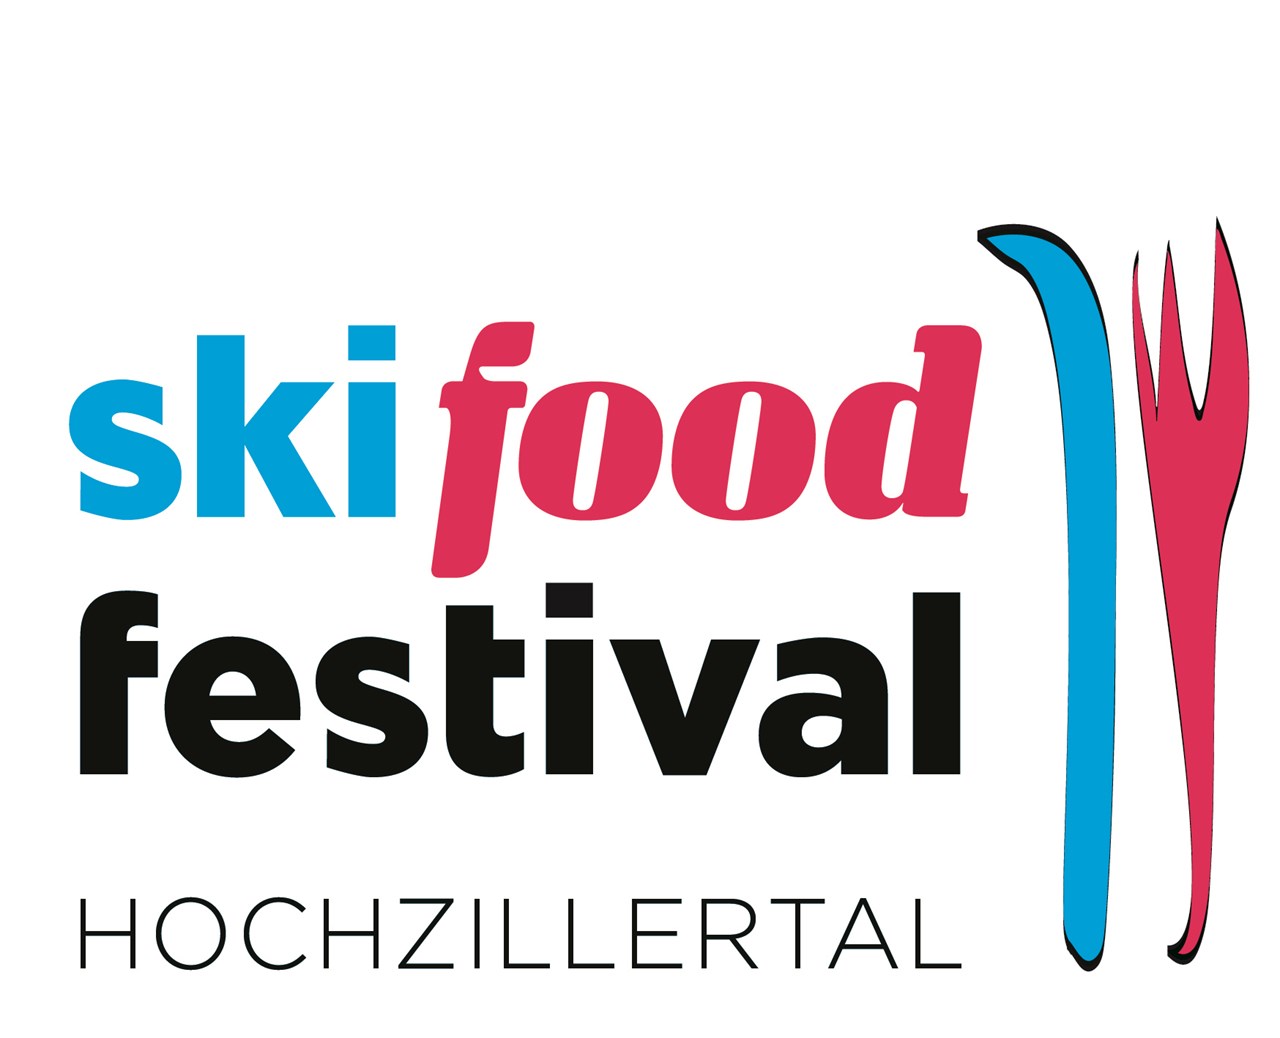 Ski-Optimal Hochzillertal Kaltenbach Events Ski-Food-Festival